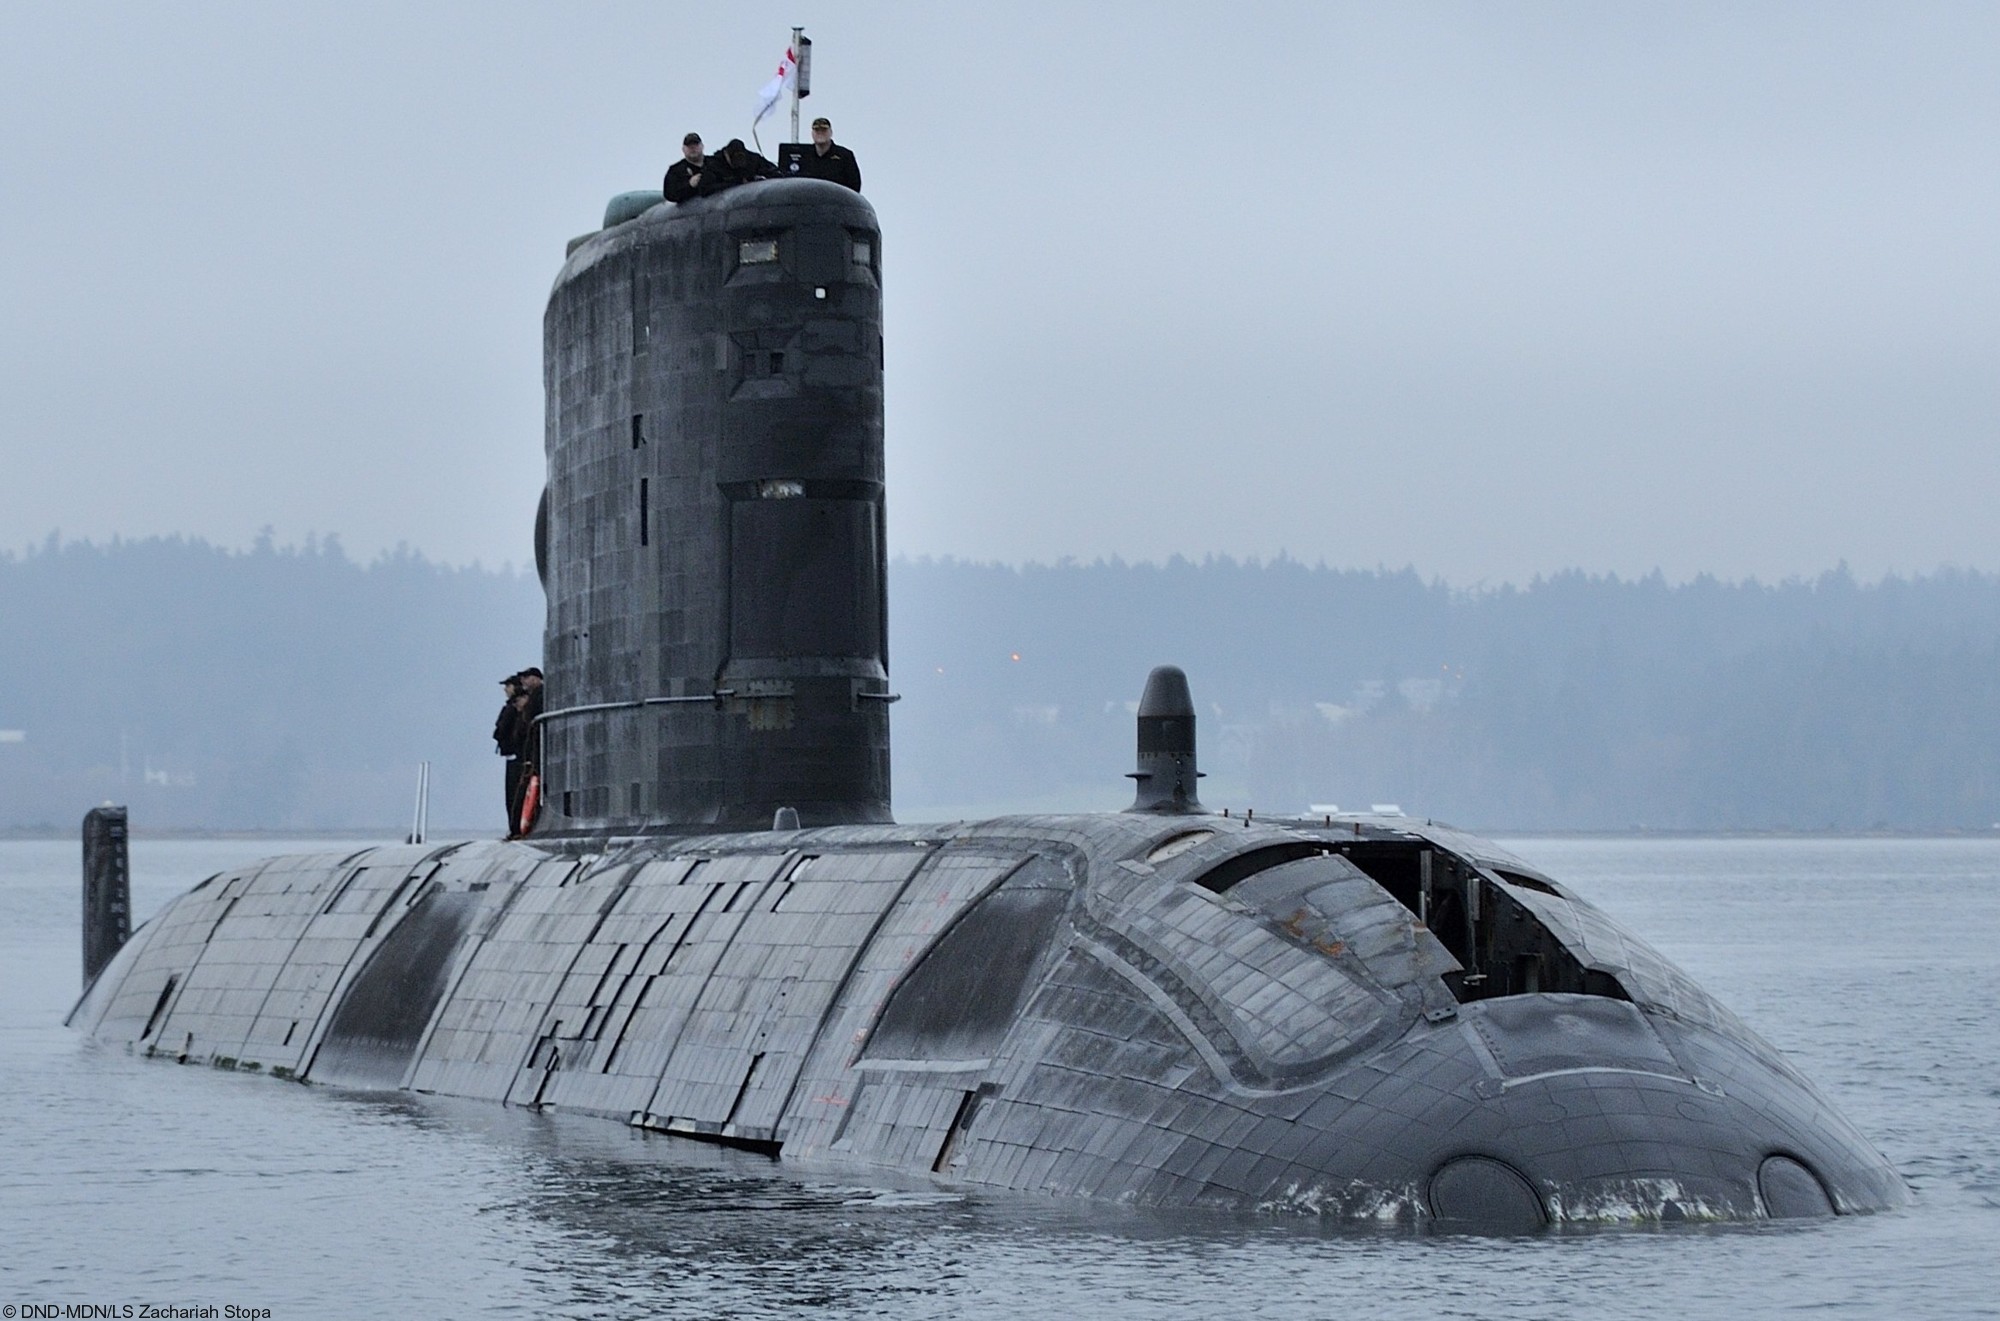 ssk-876 hmcs victoria upholder class attack submarine hunter killer ncsm royal canadian navy 21